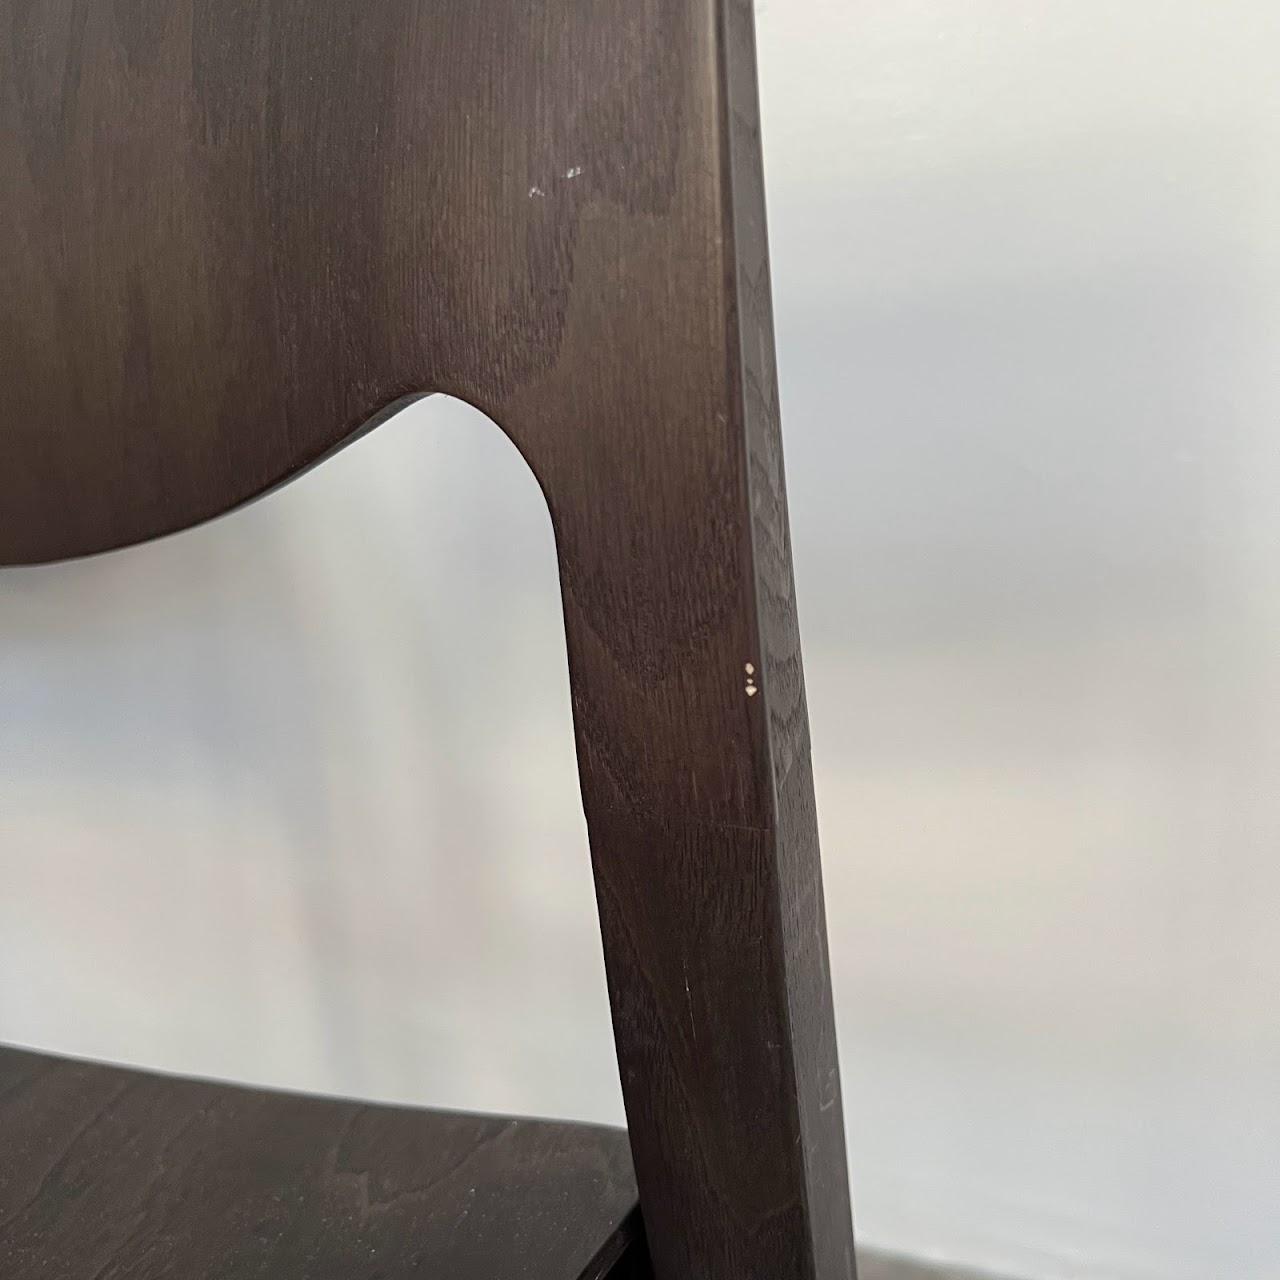 Stua Laclasica Molded Plywood Chair Pair